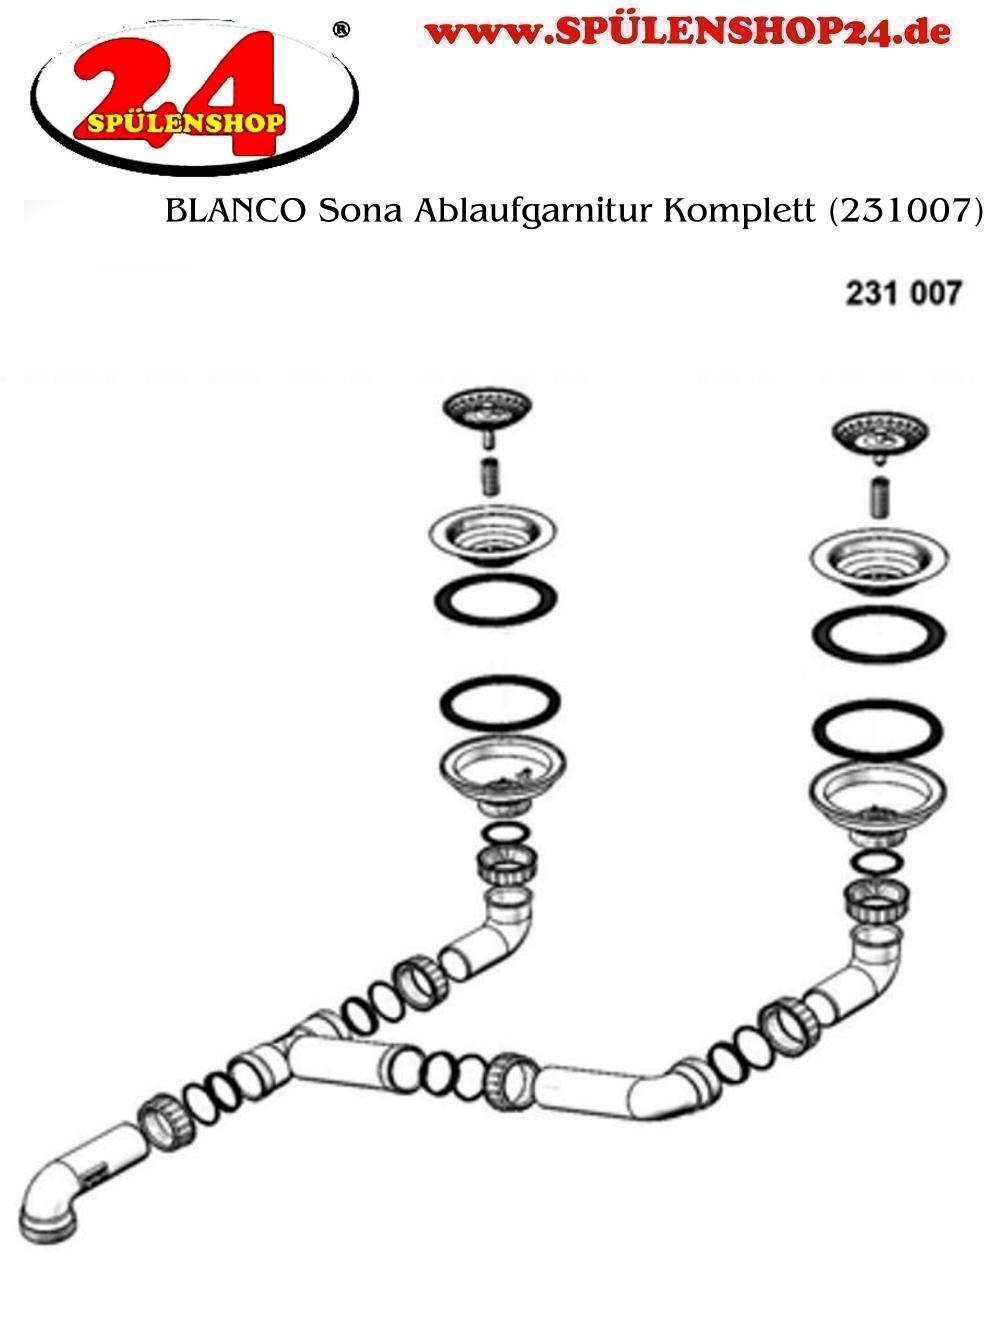 BLANCO Sona Ablaufgarnitur Komplett (231007) | bestellen